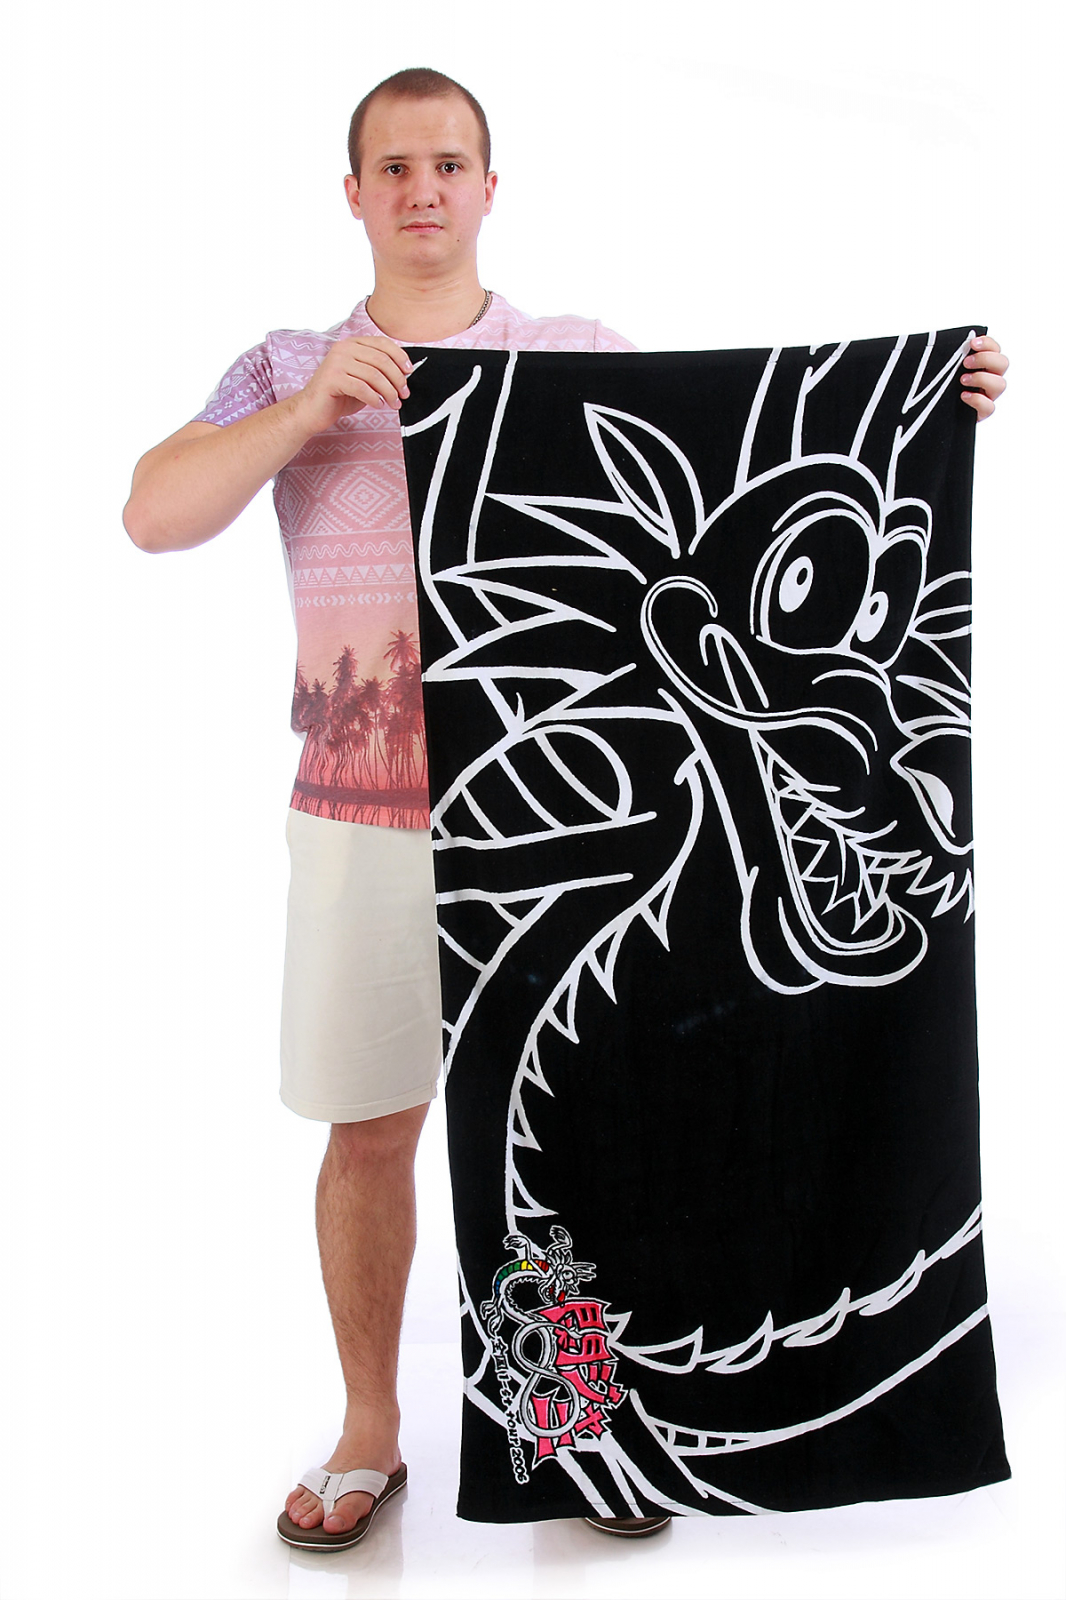 Полотенце с драконом. Полотенце банное с драконом. Пляжное полотенце мужское. Полотенце с драконом кухонное.